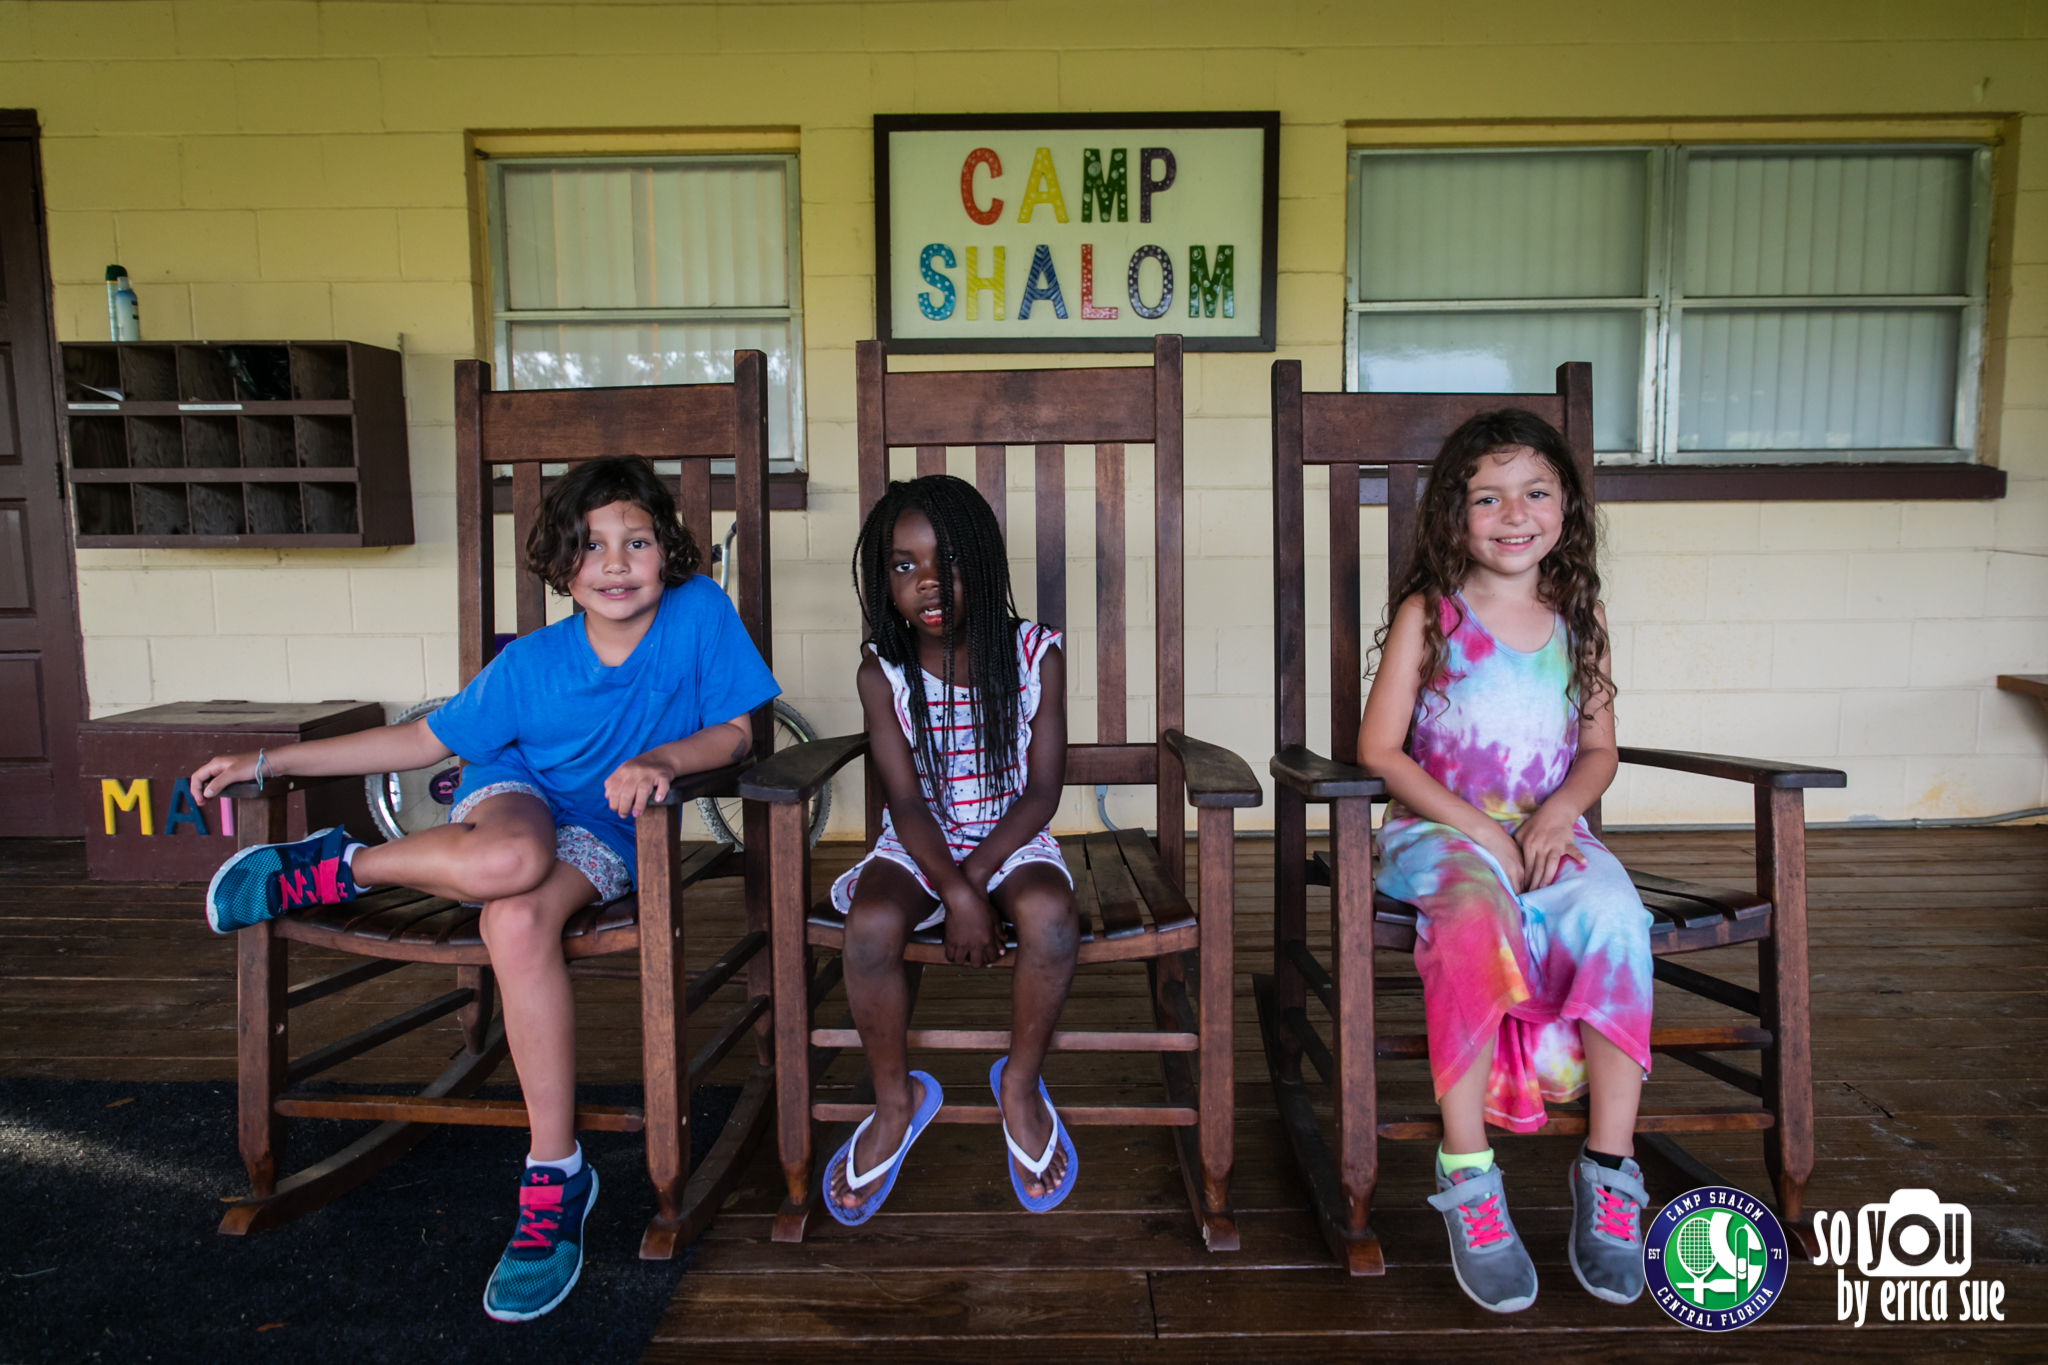 camp-shalom-sleepaway-camp-central-florida-so-you-by-erica-sue-3074.jpg